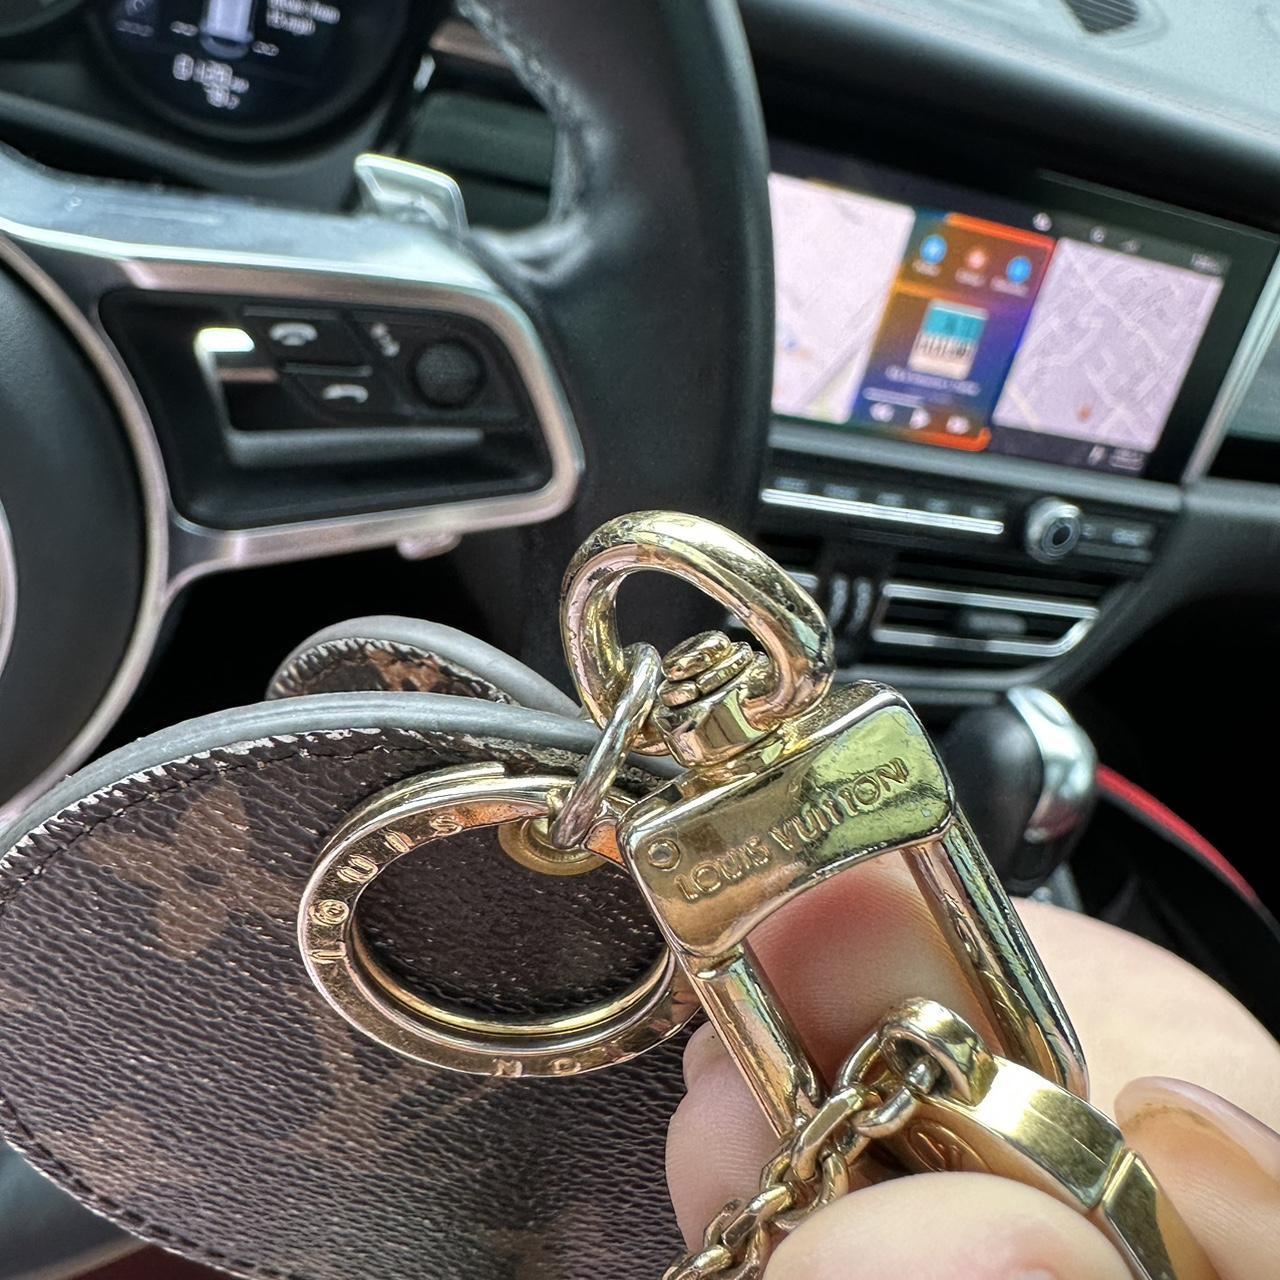 used LV Monogram Sports-Car shaped keychain in - Depop